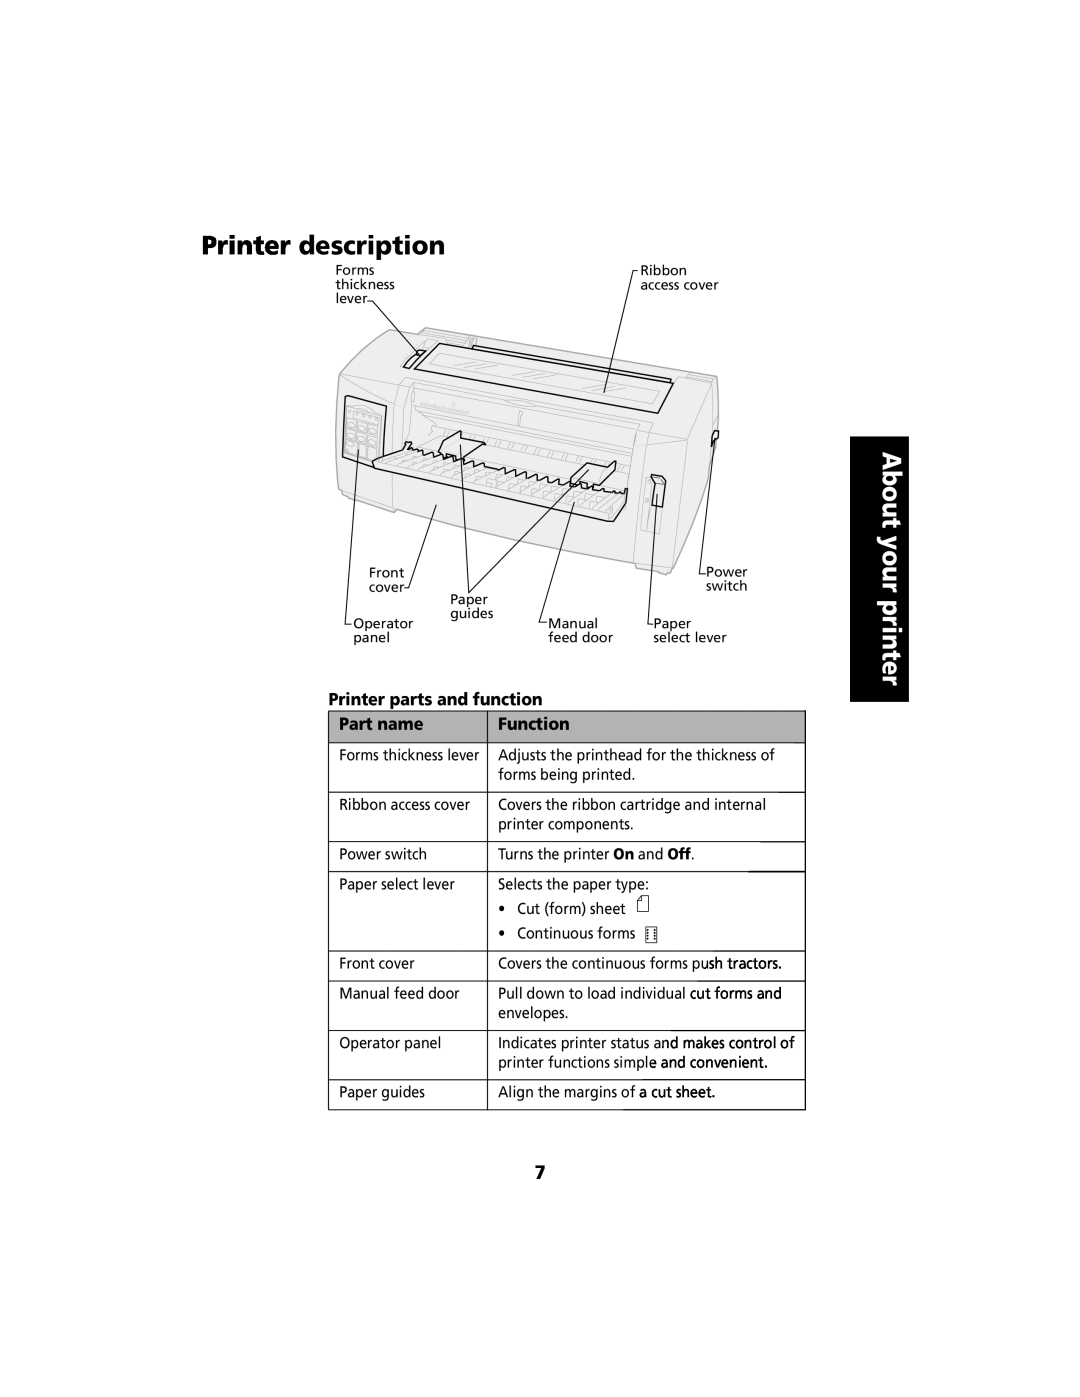 Lexmark 2480 manual Printer description, About your printer, Printer parts and function, Part name, Function 